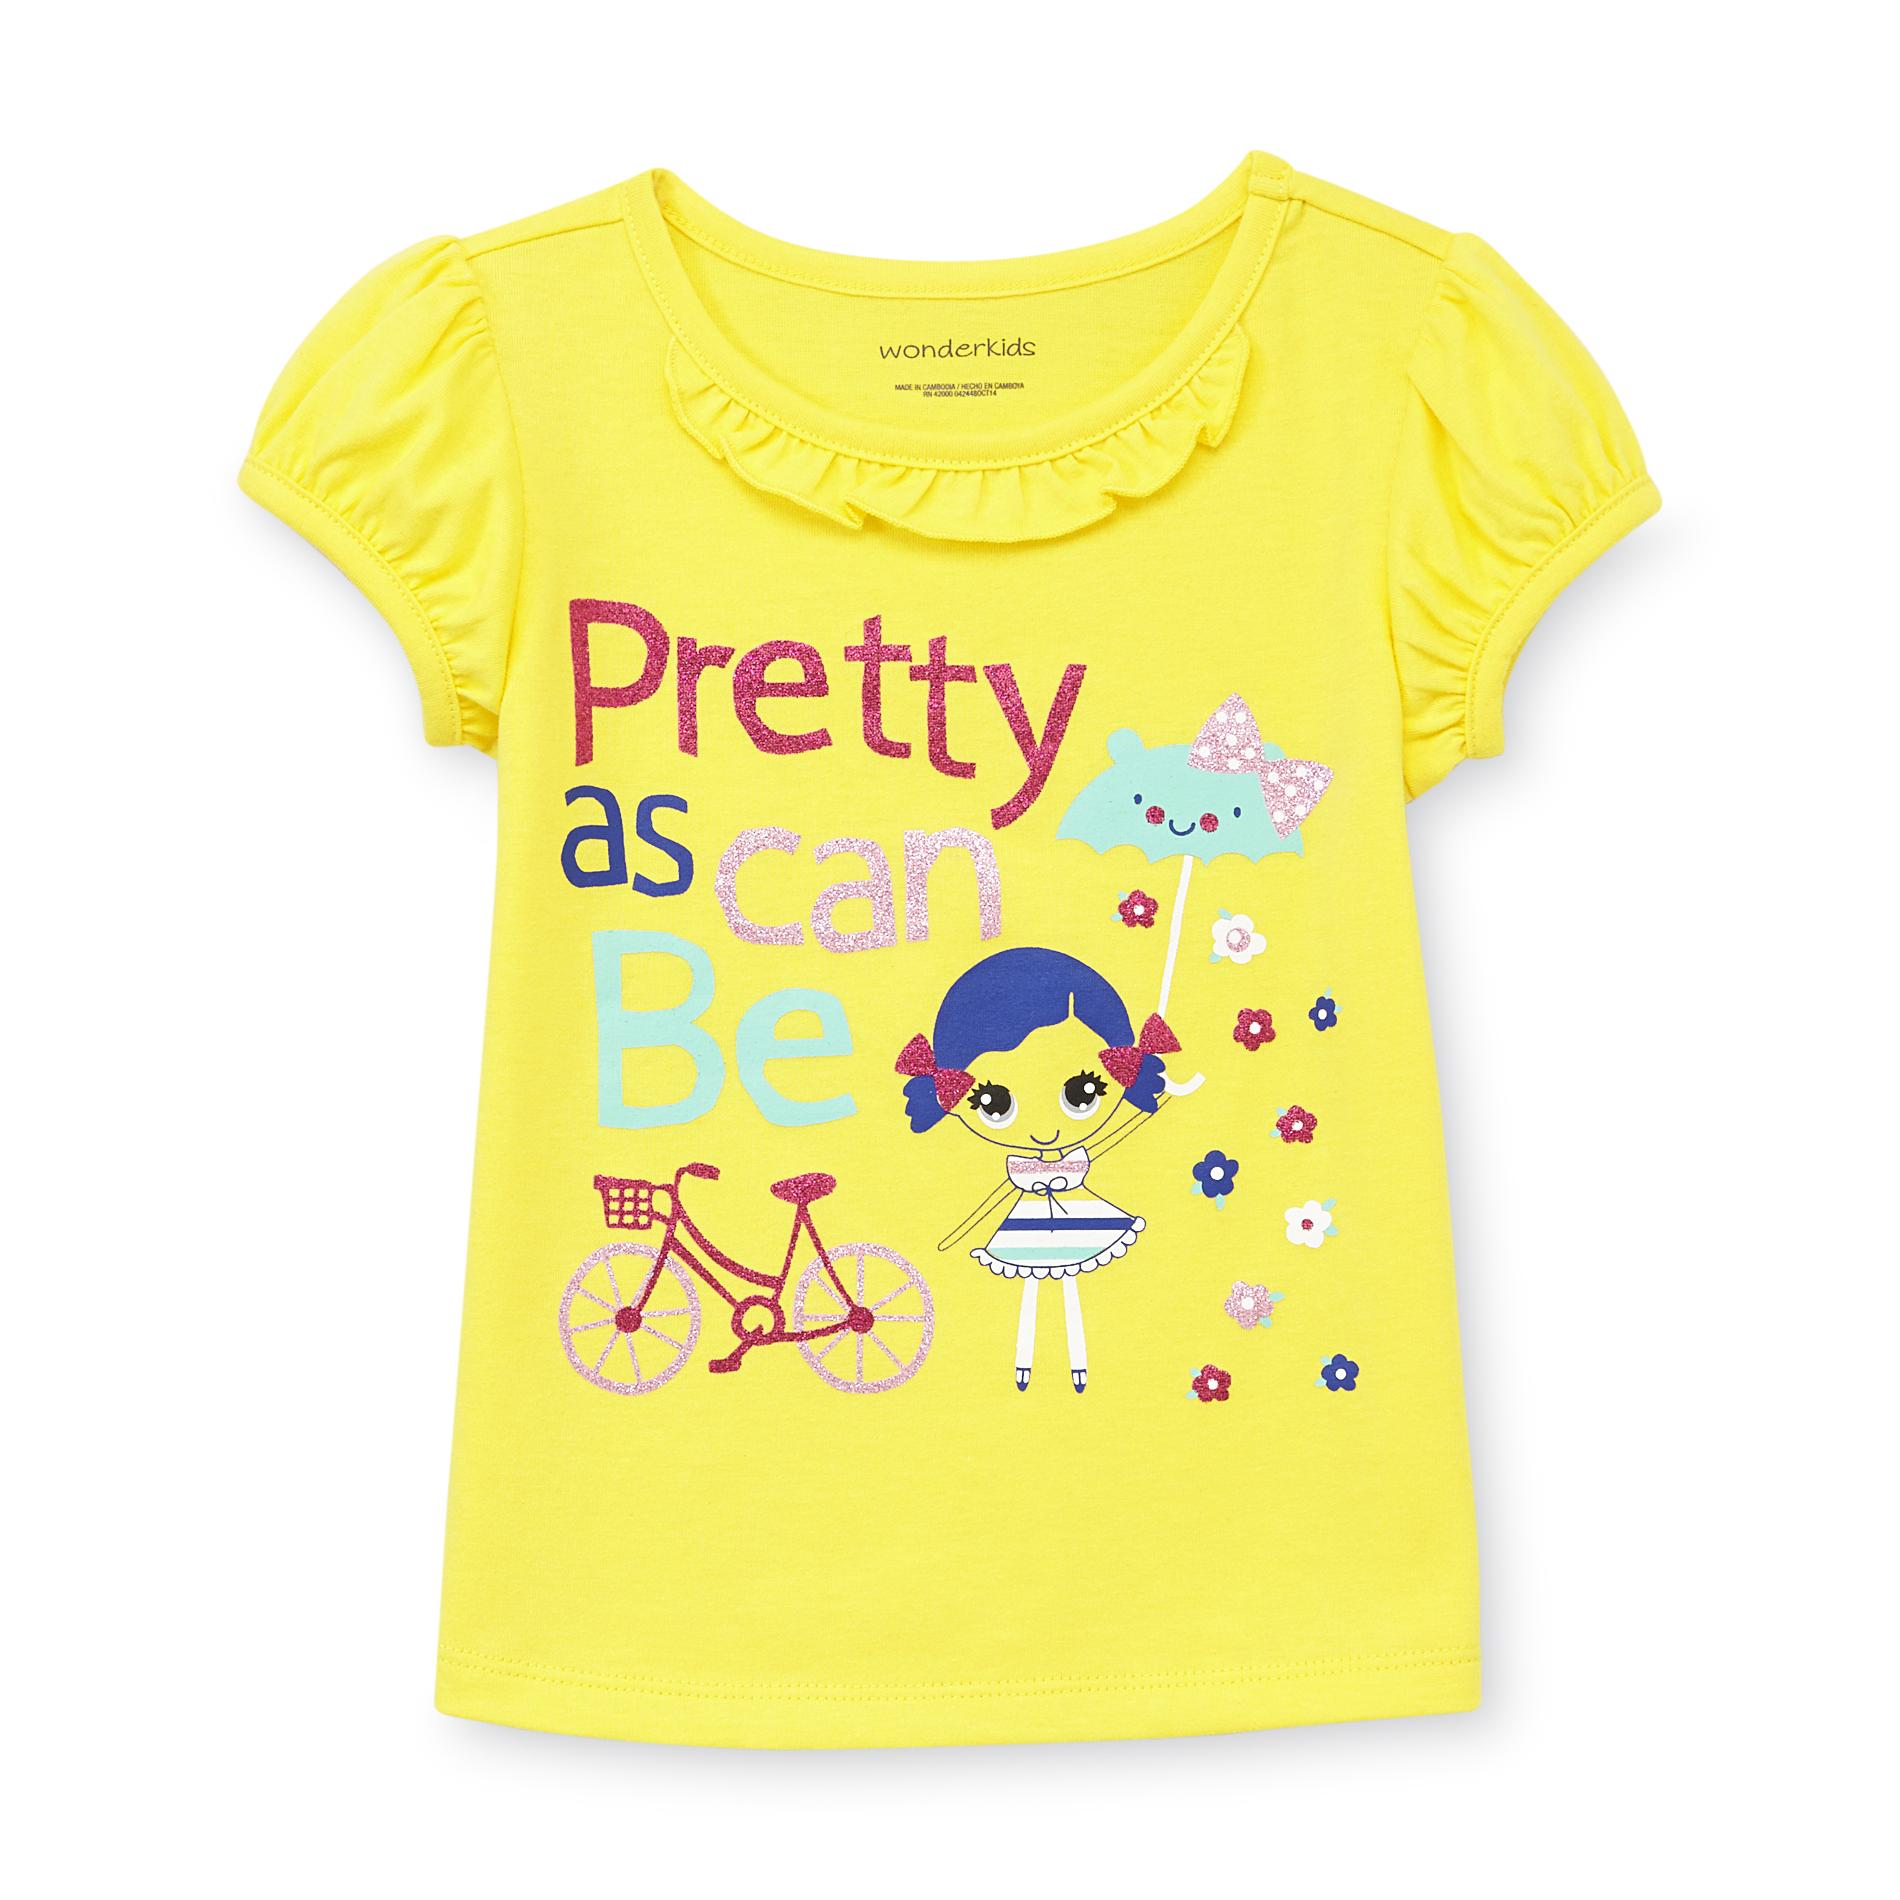 WonderKids Toddler Girl's Embellished Top - Pretty